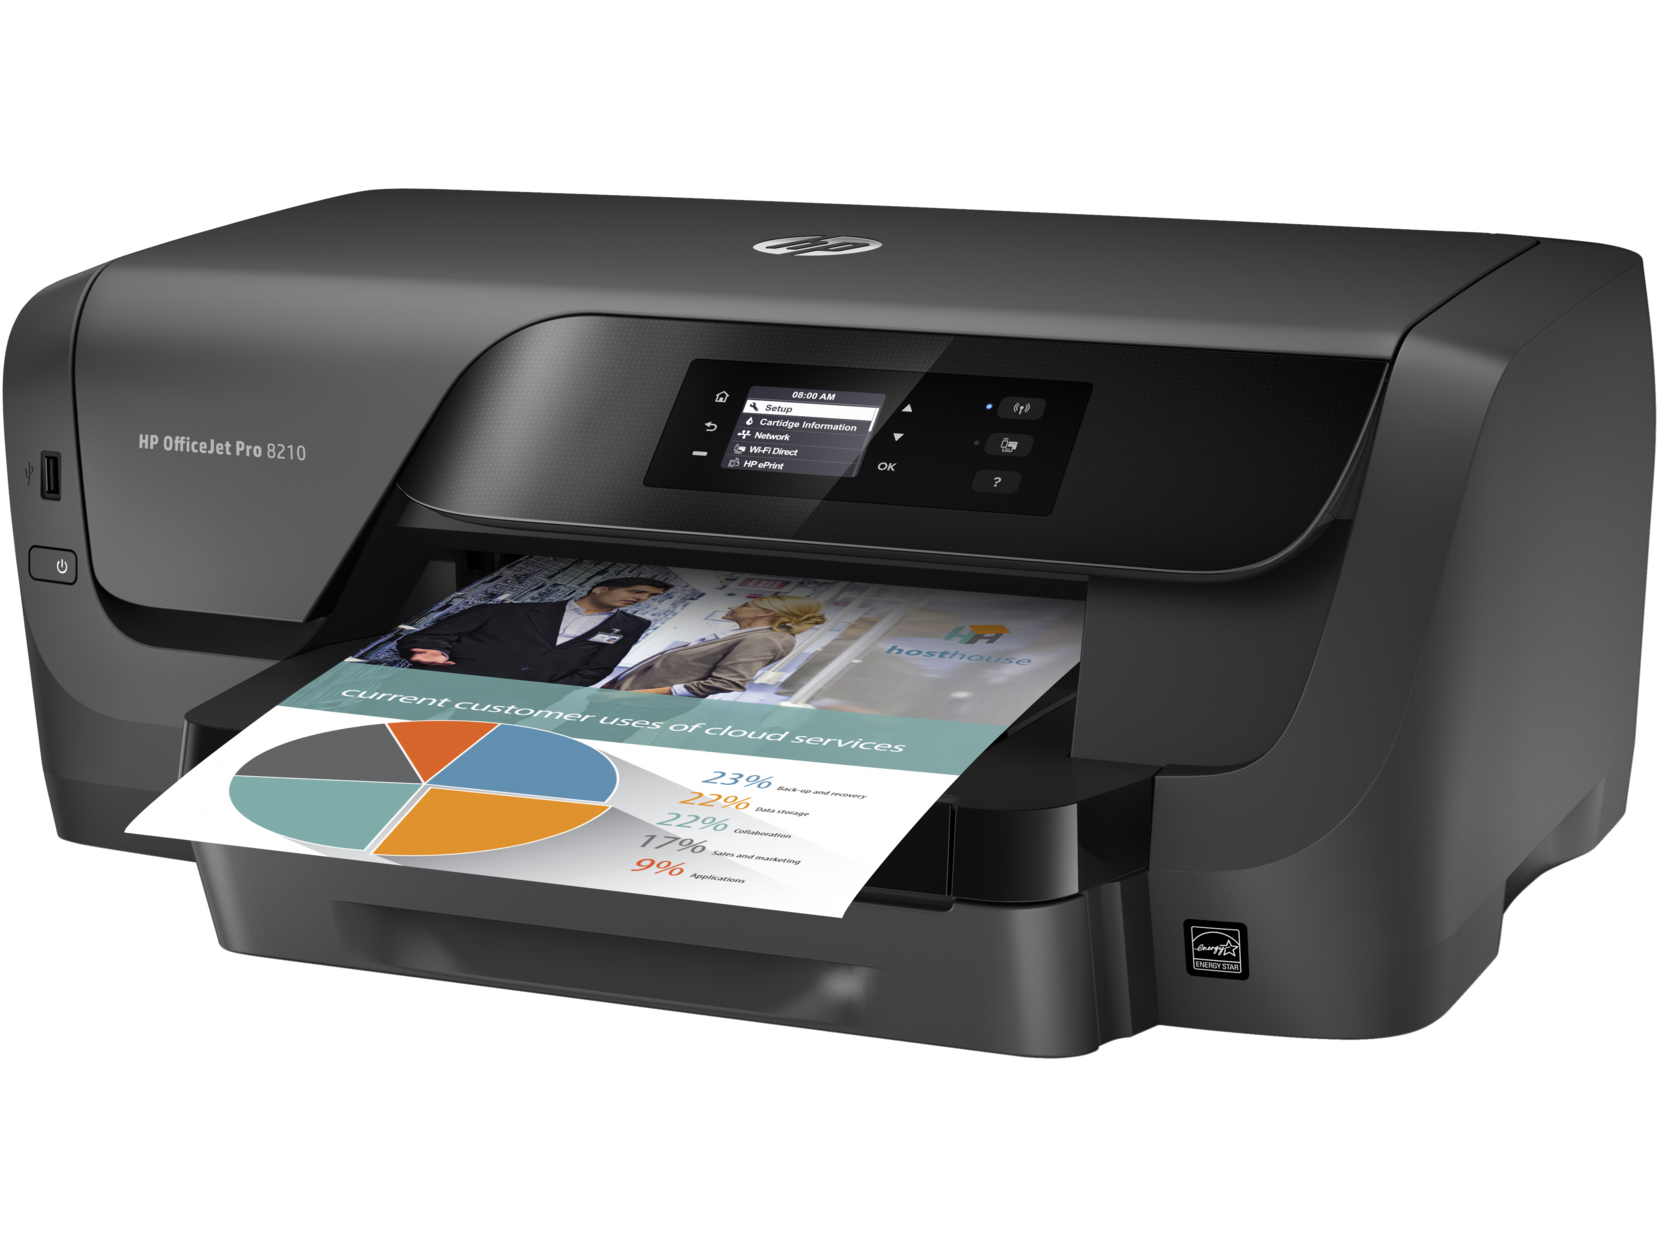 HP OfficeJet Pro 8210 Wireless Colour Inkjet Printer - image 2 of 7